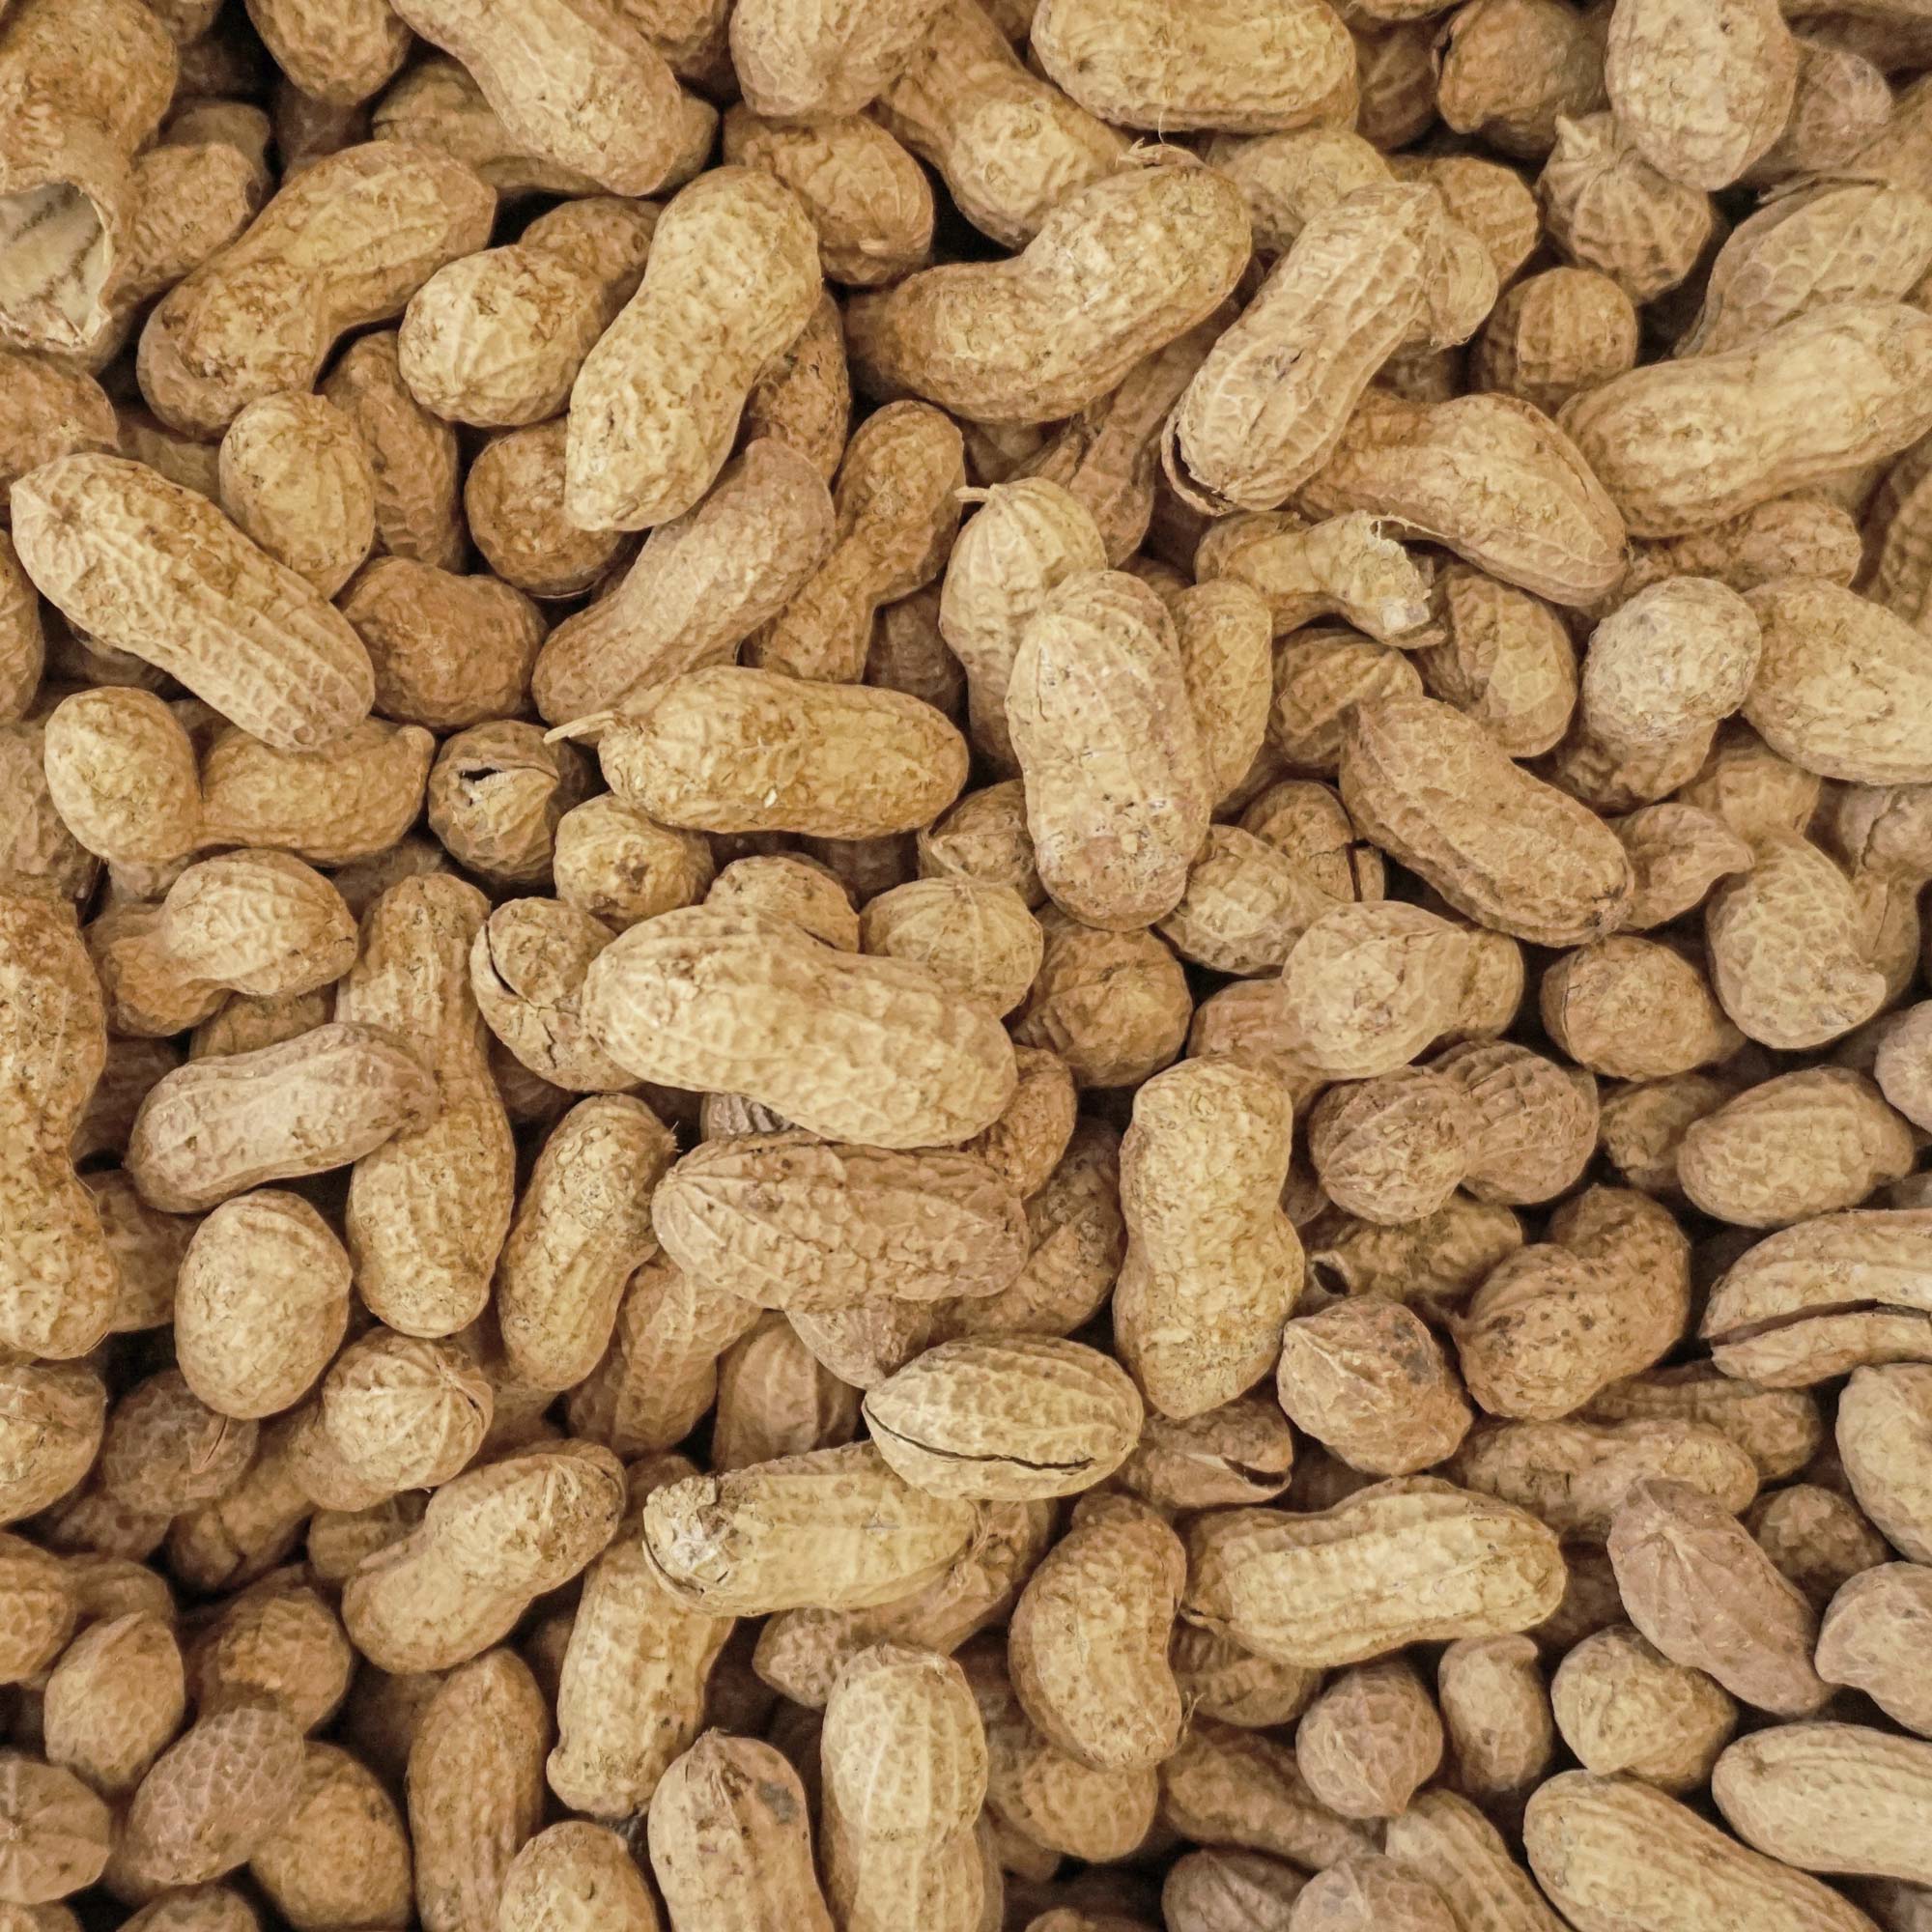 Wingfield Farm Virginia In-Shell Peanuts, Feed Wild Animals, 25 Pound Bag